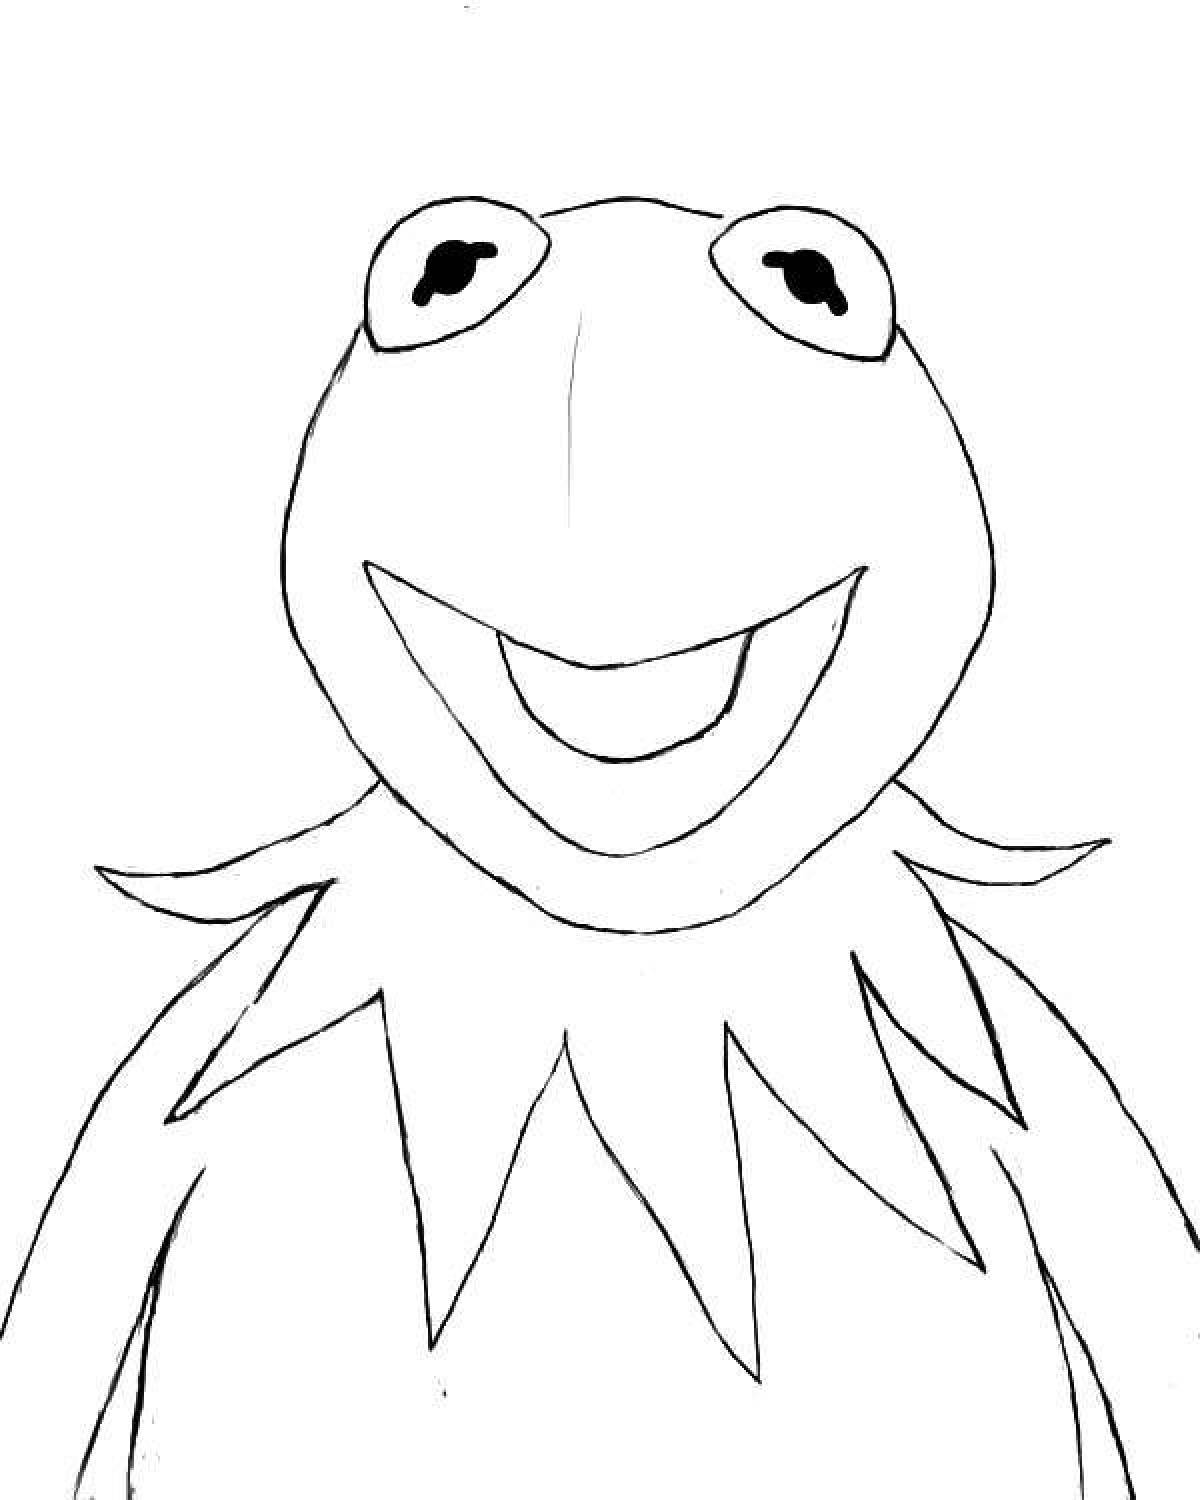 Creative tik tok frog coloring